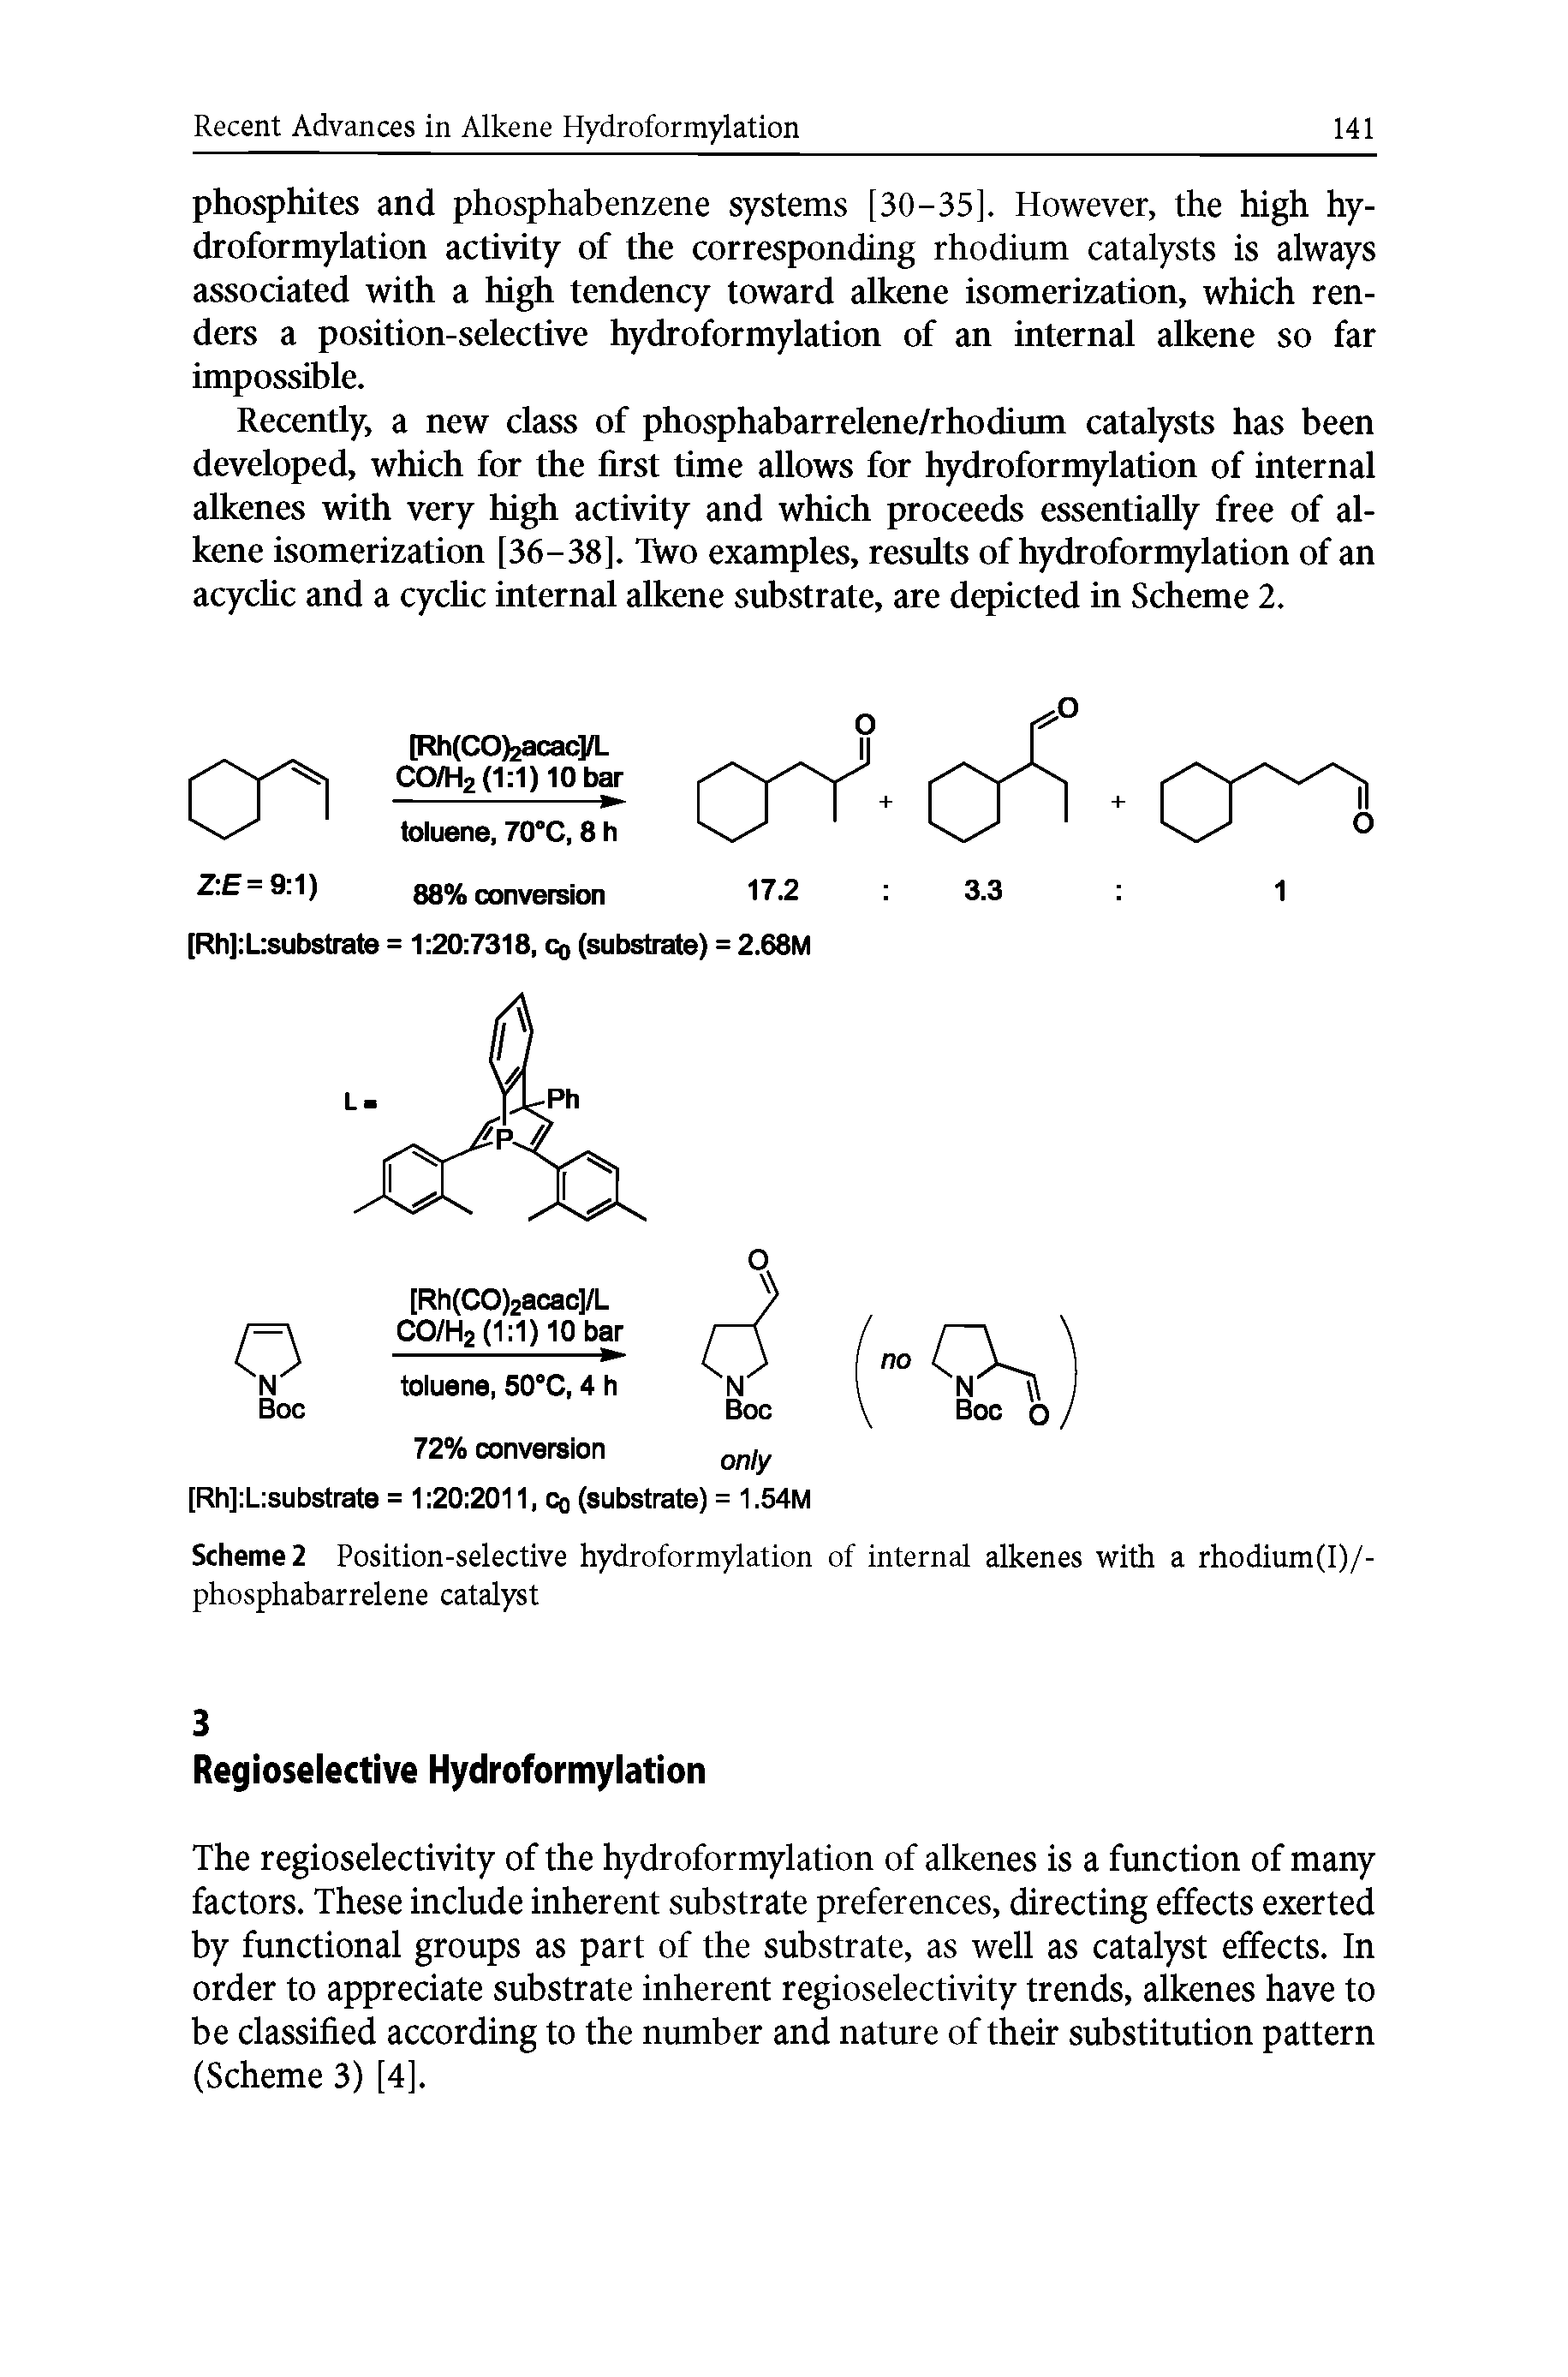 Scheme 2 Position-selective hydroformylation of internal alkenes with a rhodium(I)/-phosphabarrelene catalyst...